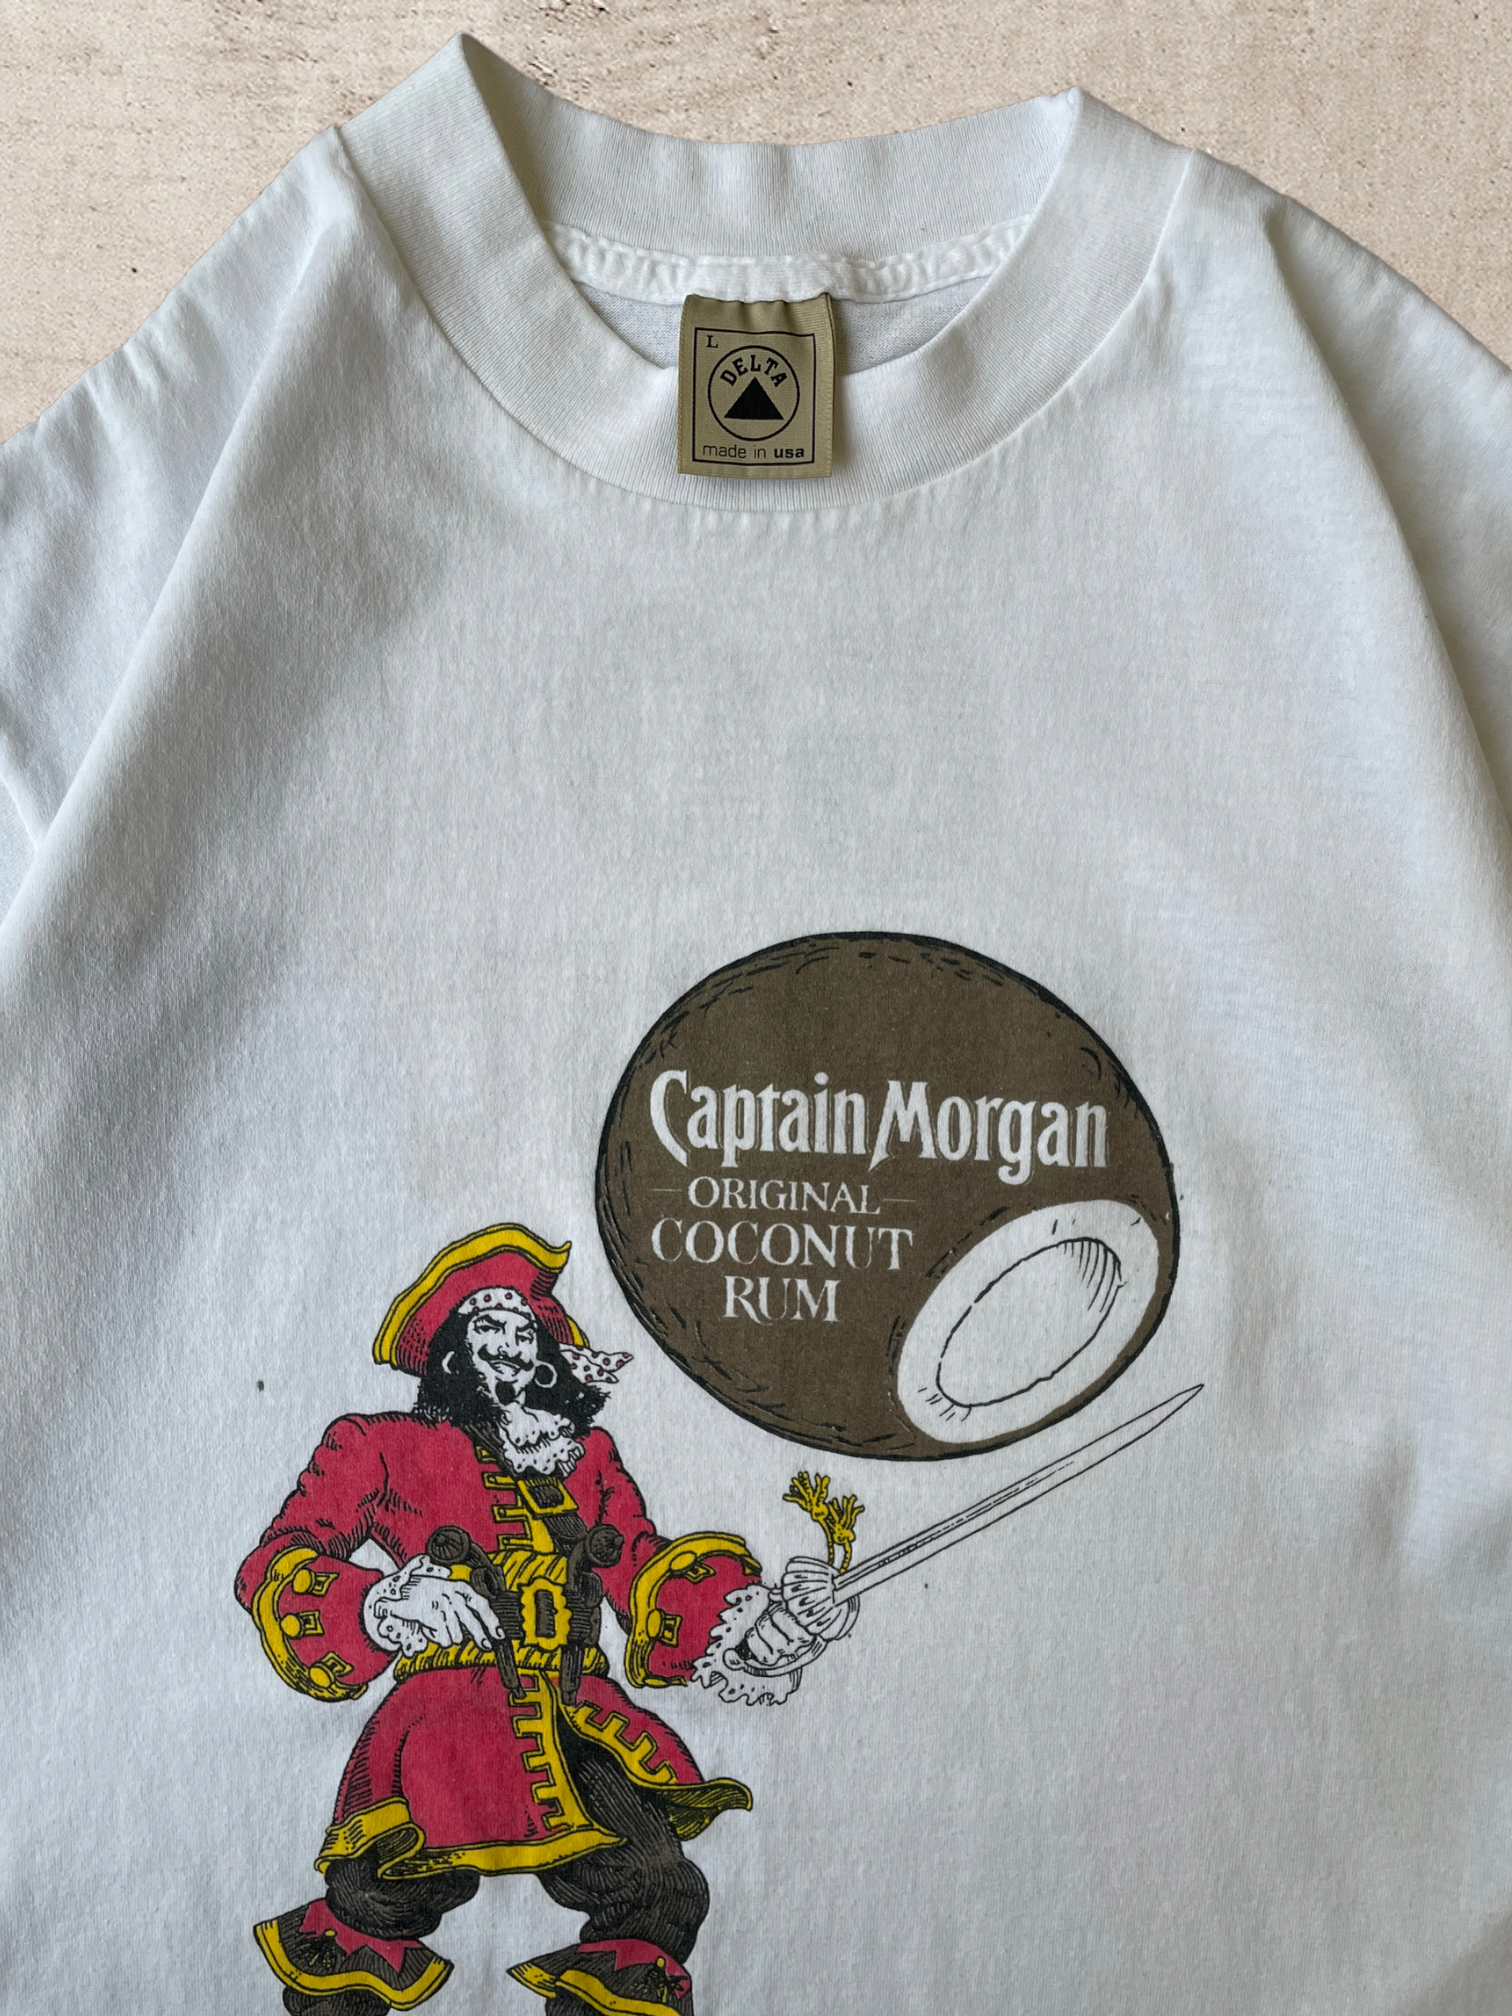 90s Captain Morgan Rum T-Shirt - Large